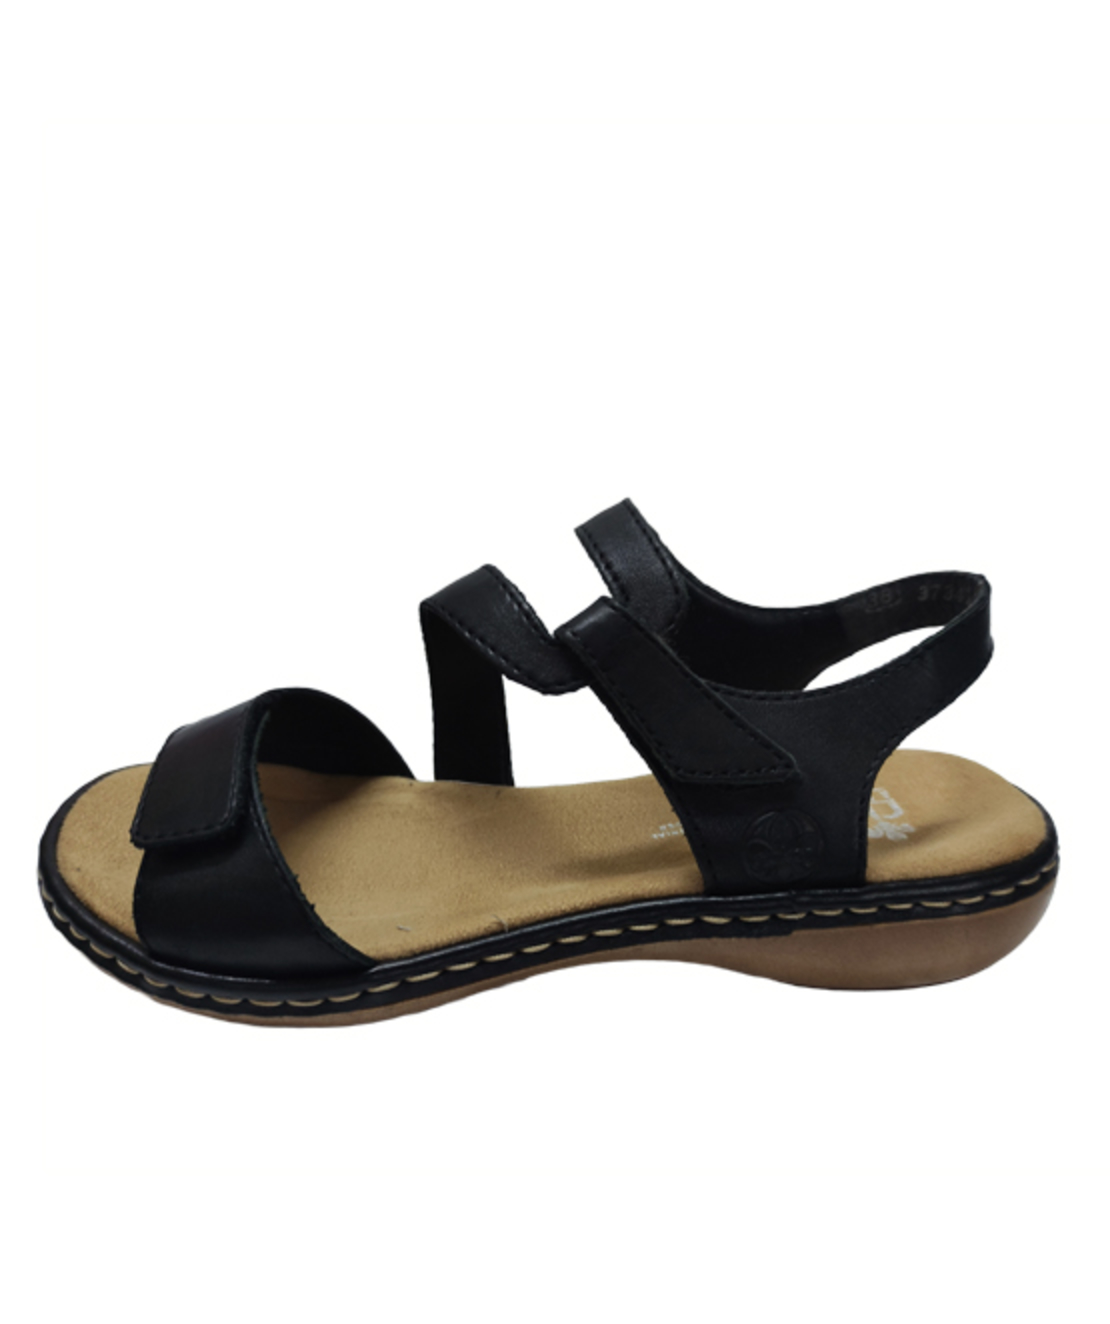 Ricker Sandals - 659C7-00 - Women